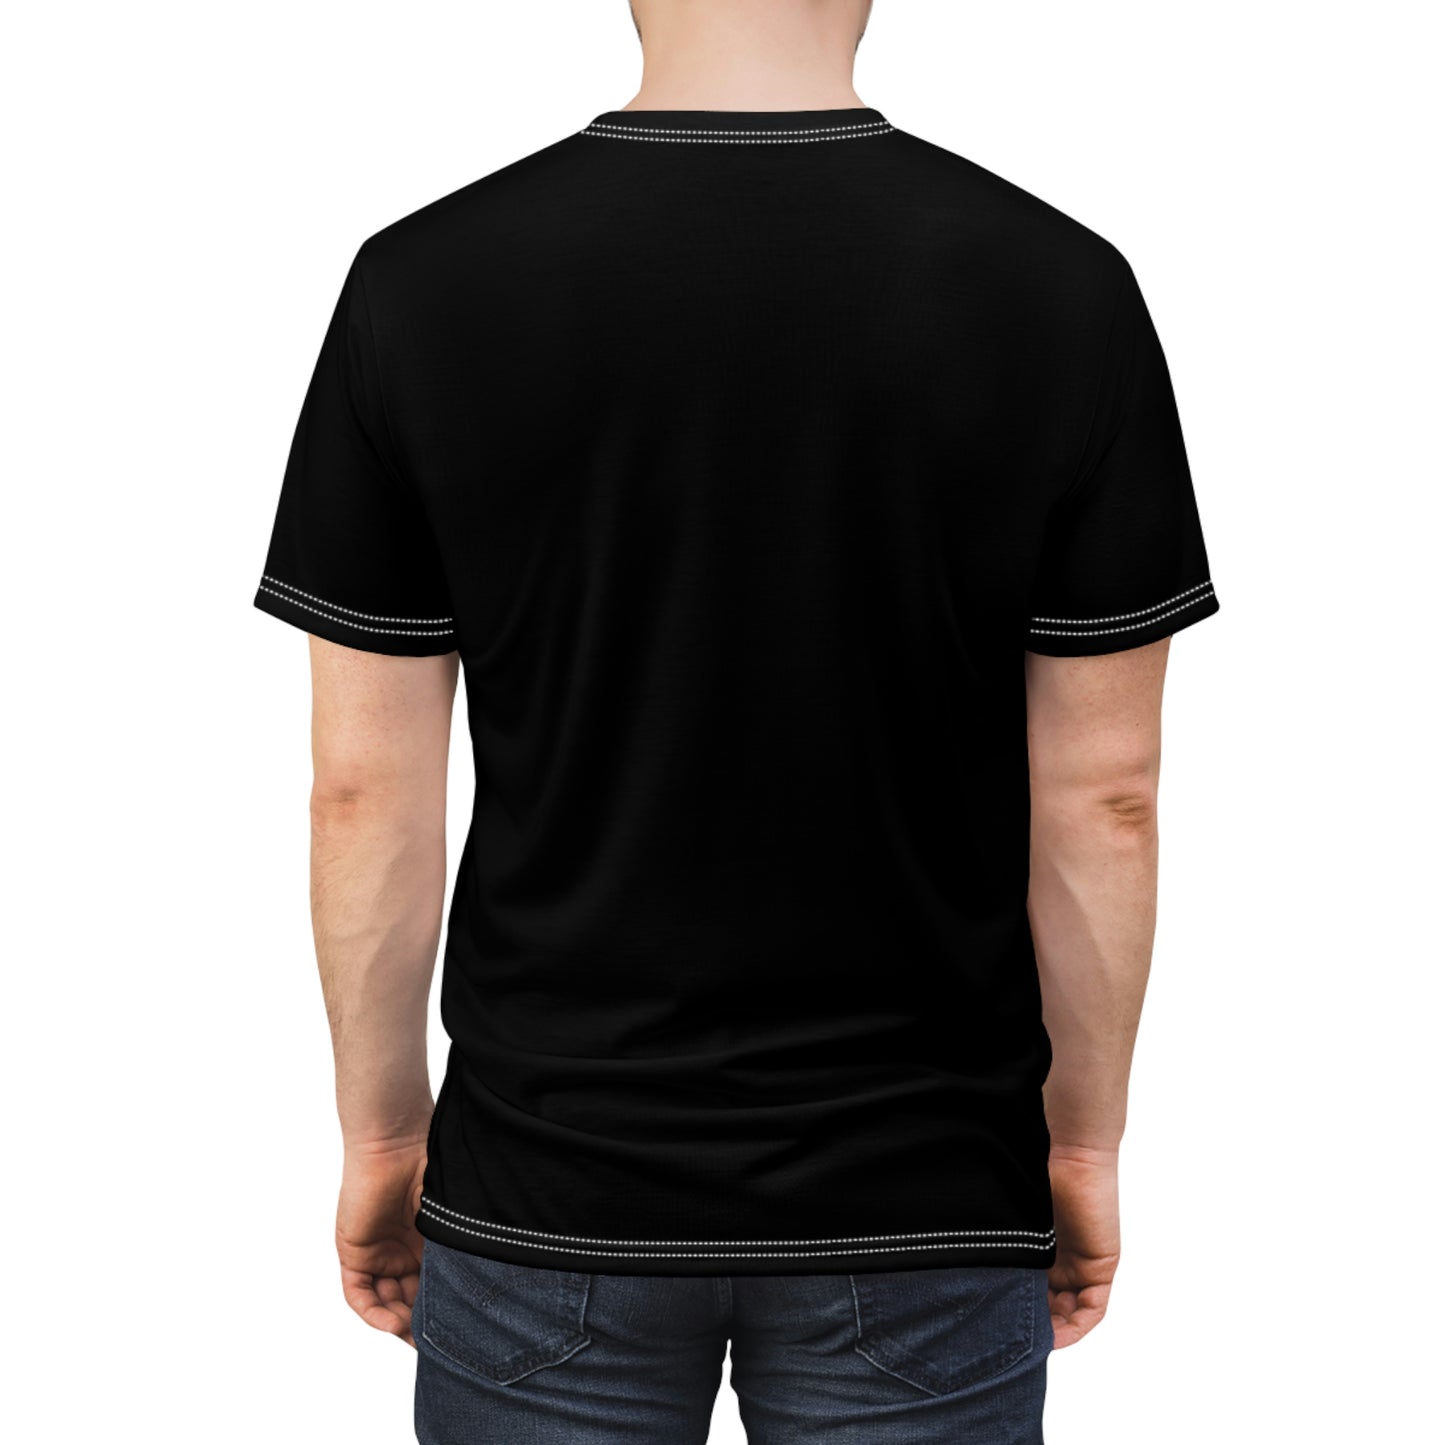 Atrocity - Unisex All-Over Print Cut & Sew T-Shirt